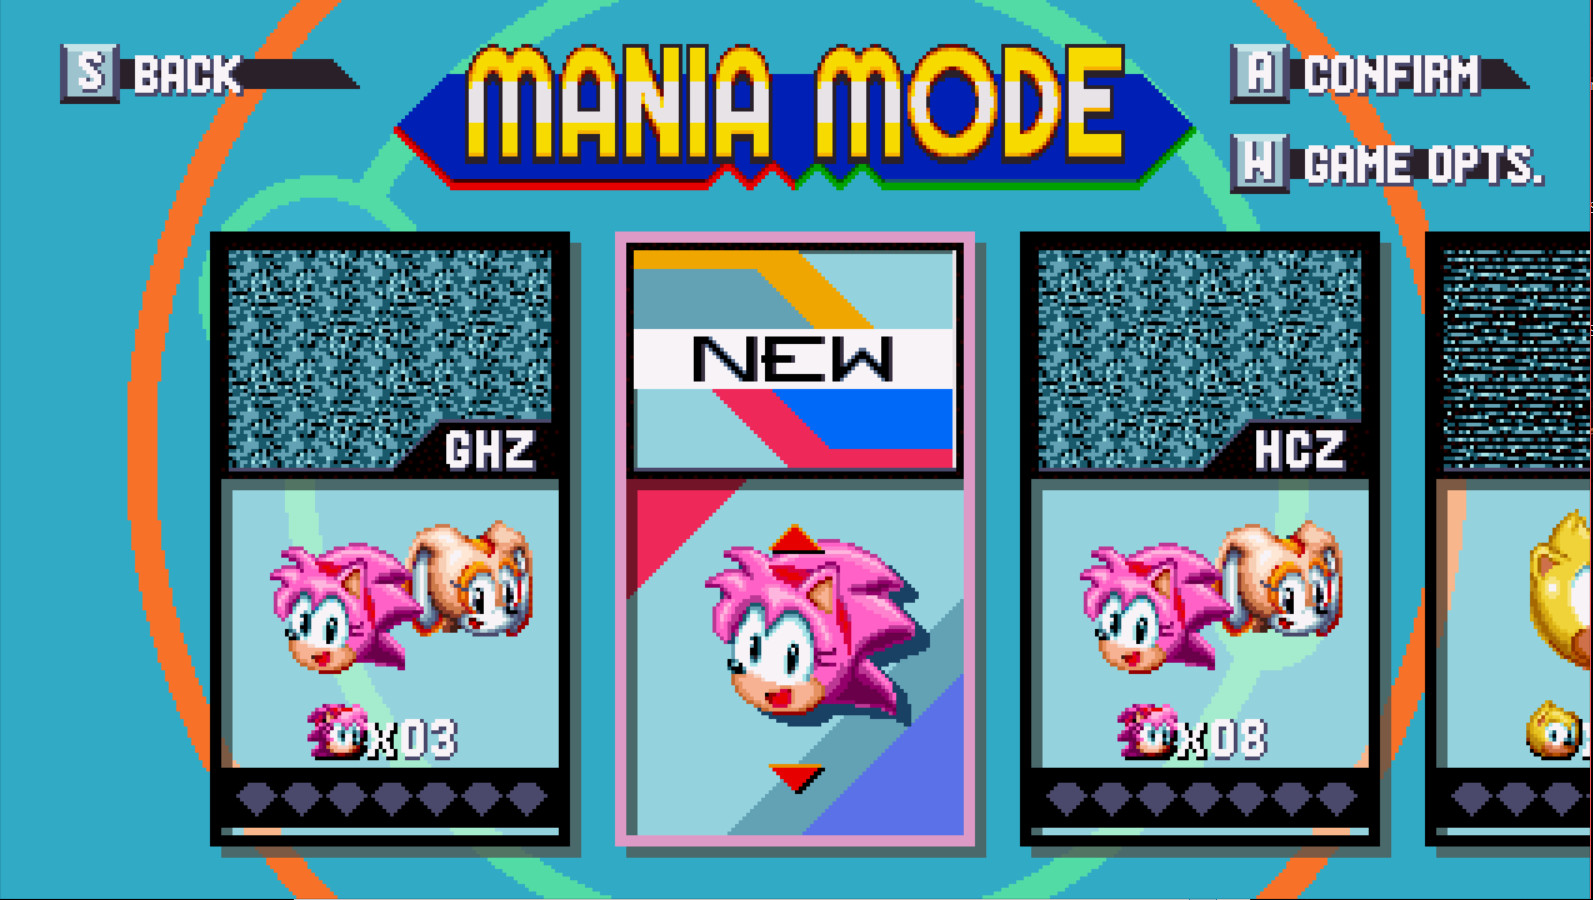 Amy Mania!? - Sonic & Amy Play Sonic Mania Amy Mania Mod! 